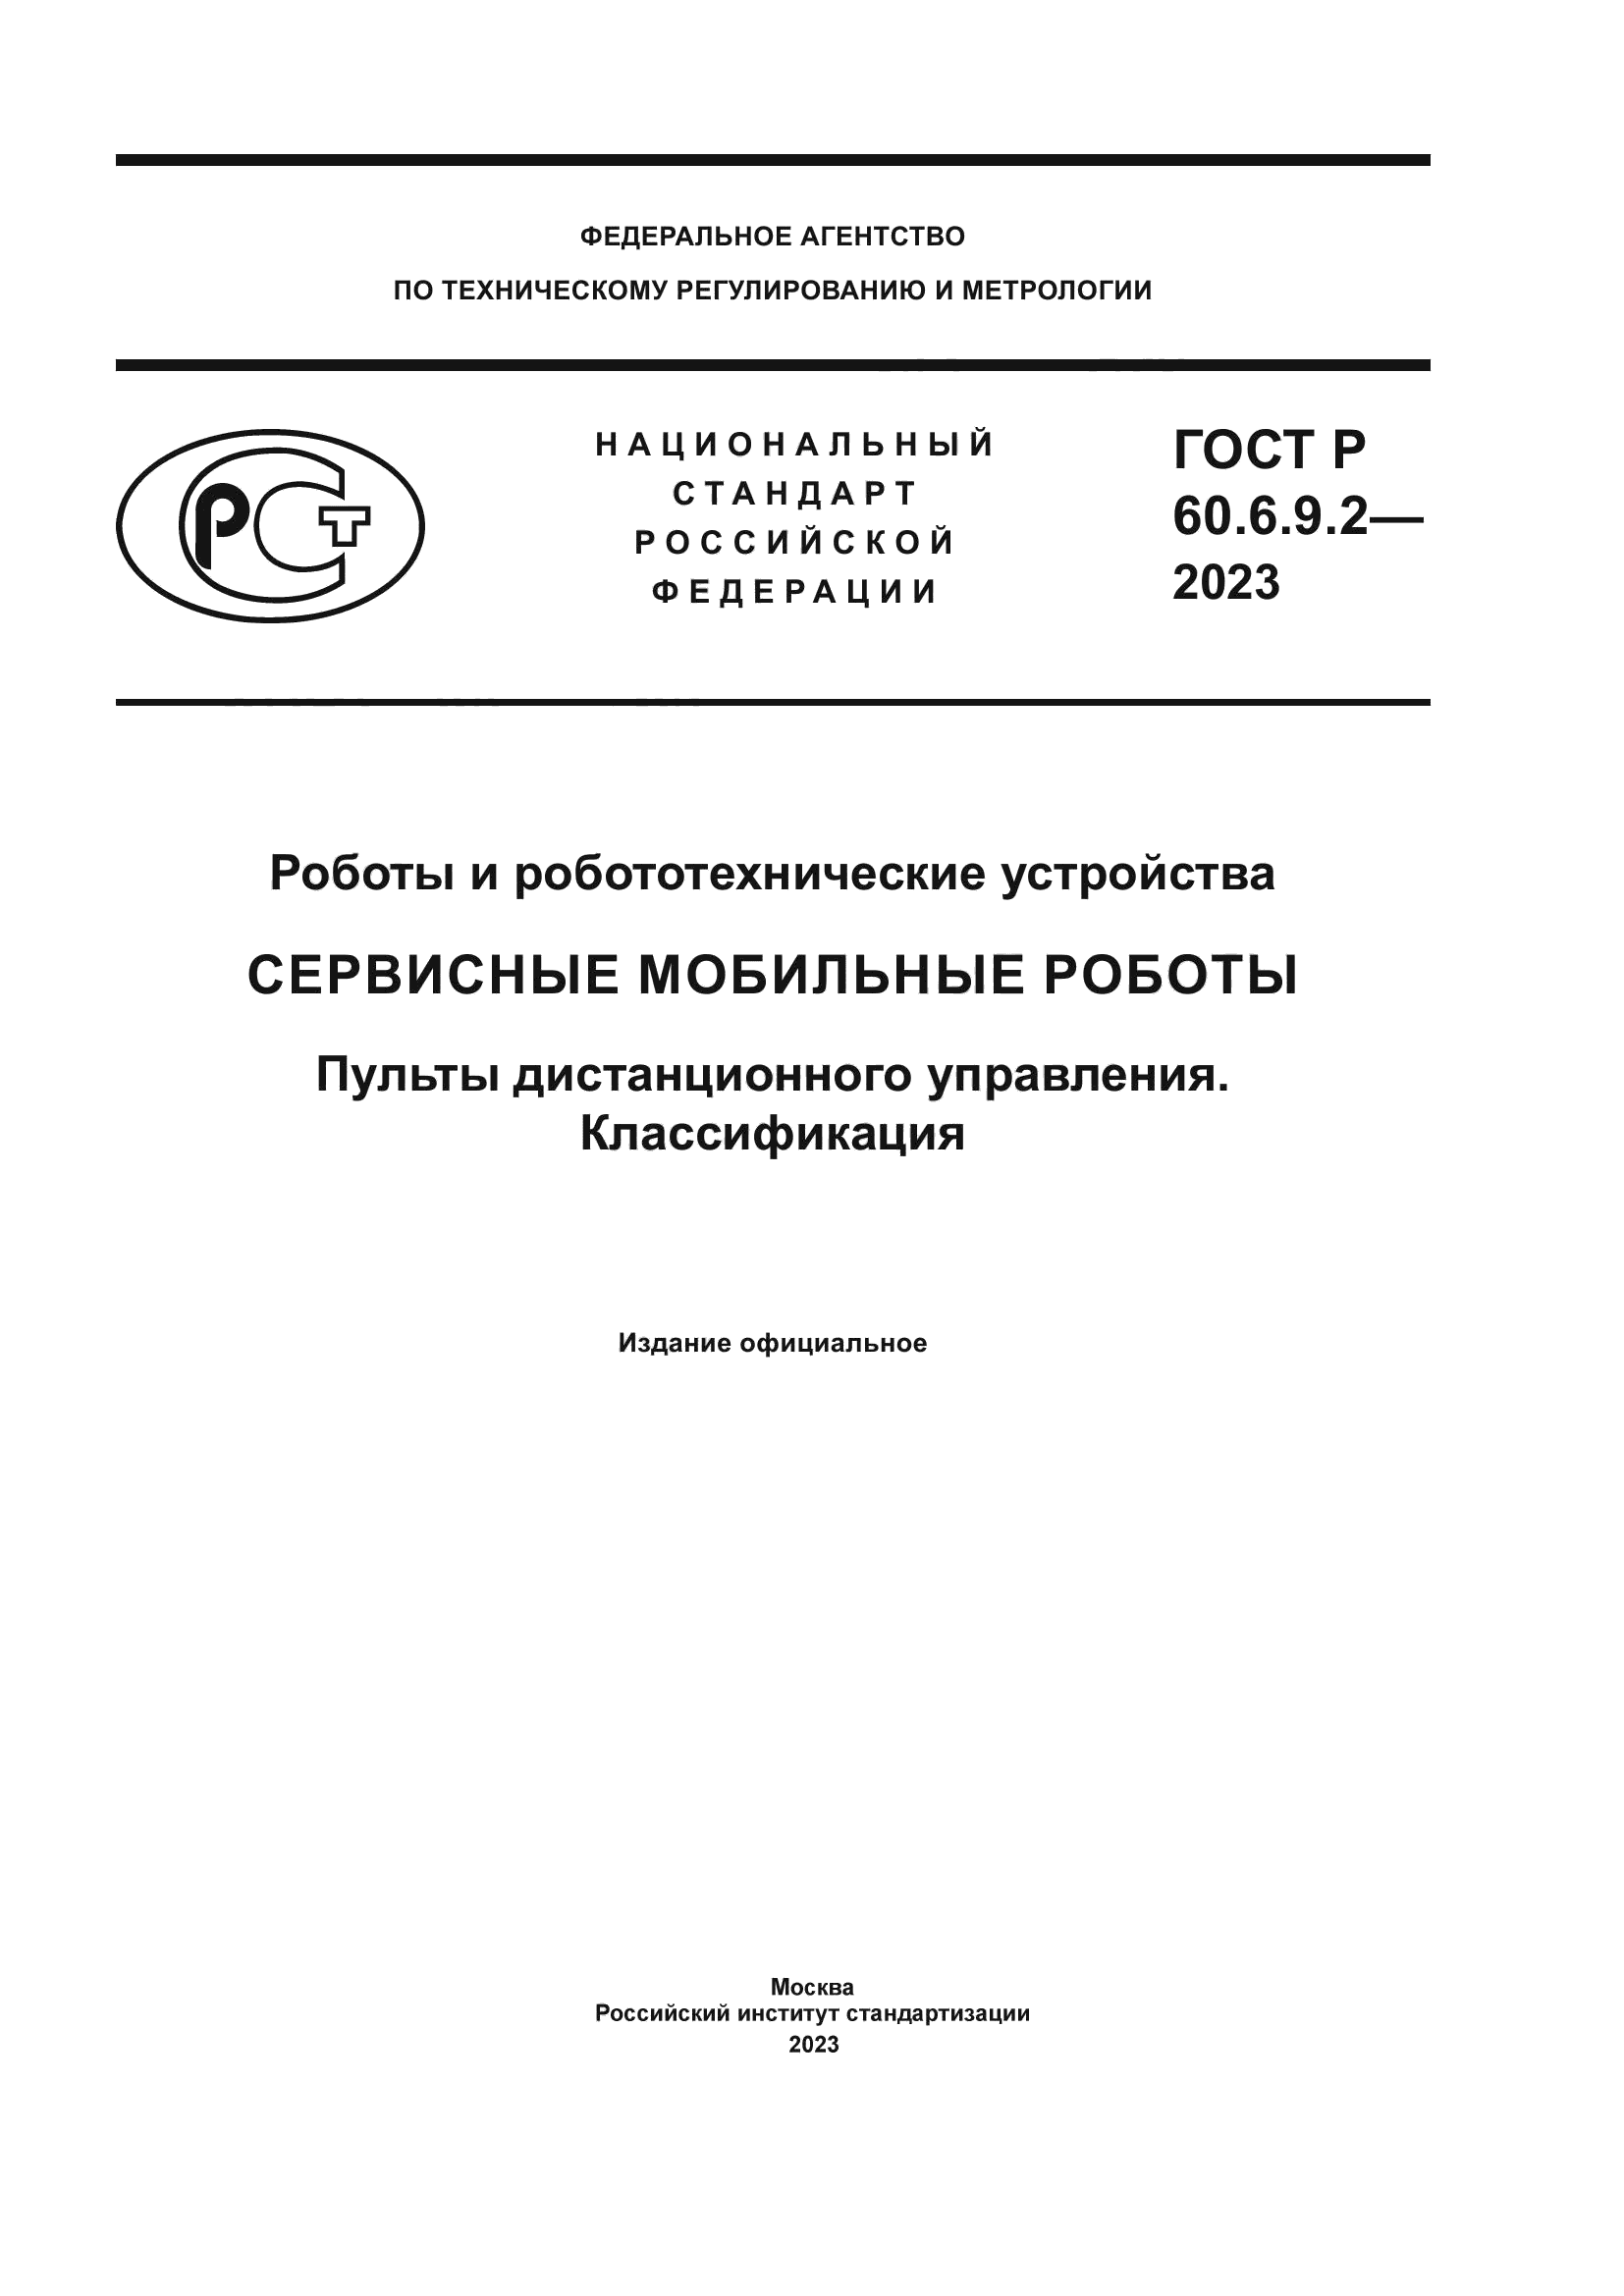 ГОСТ Р 60.6.9.2-2023